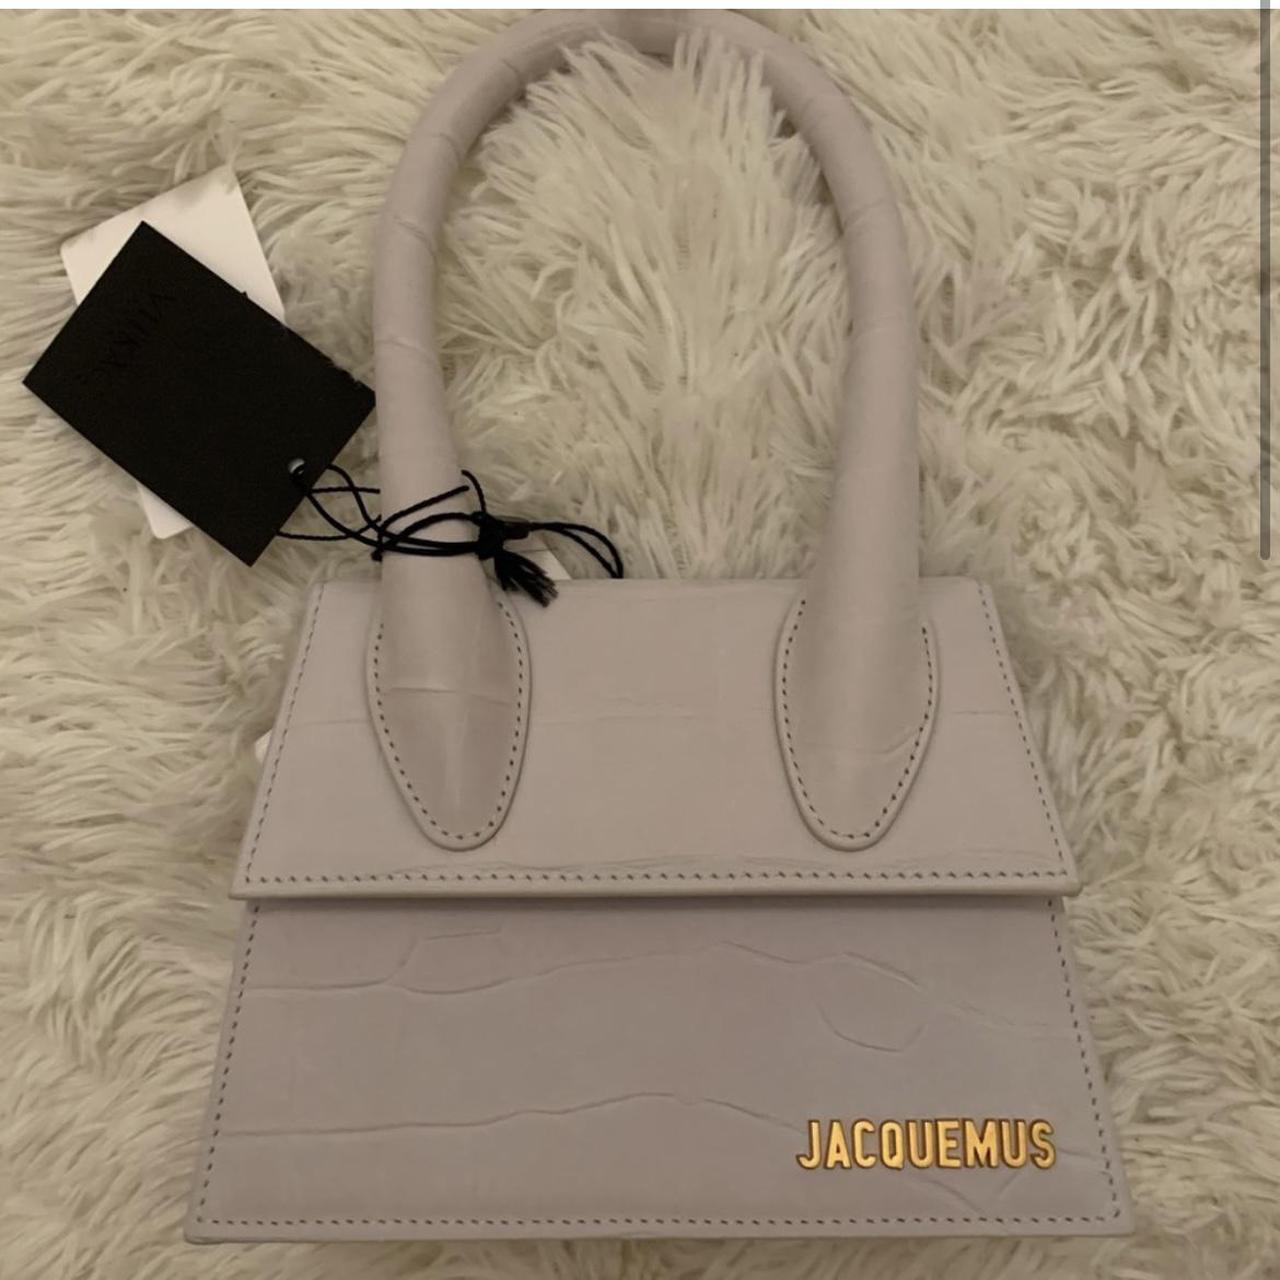 Jacquemus Women's White Bag